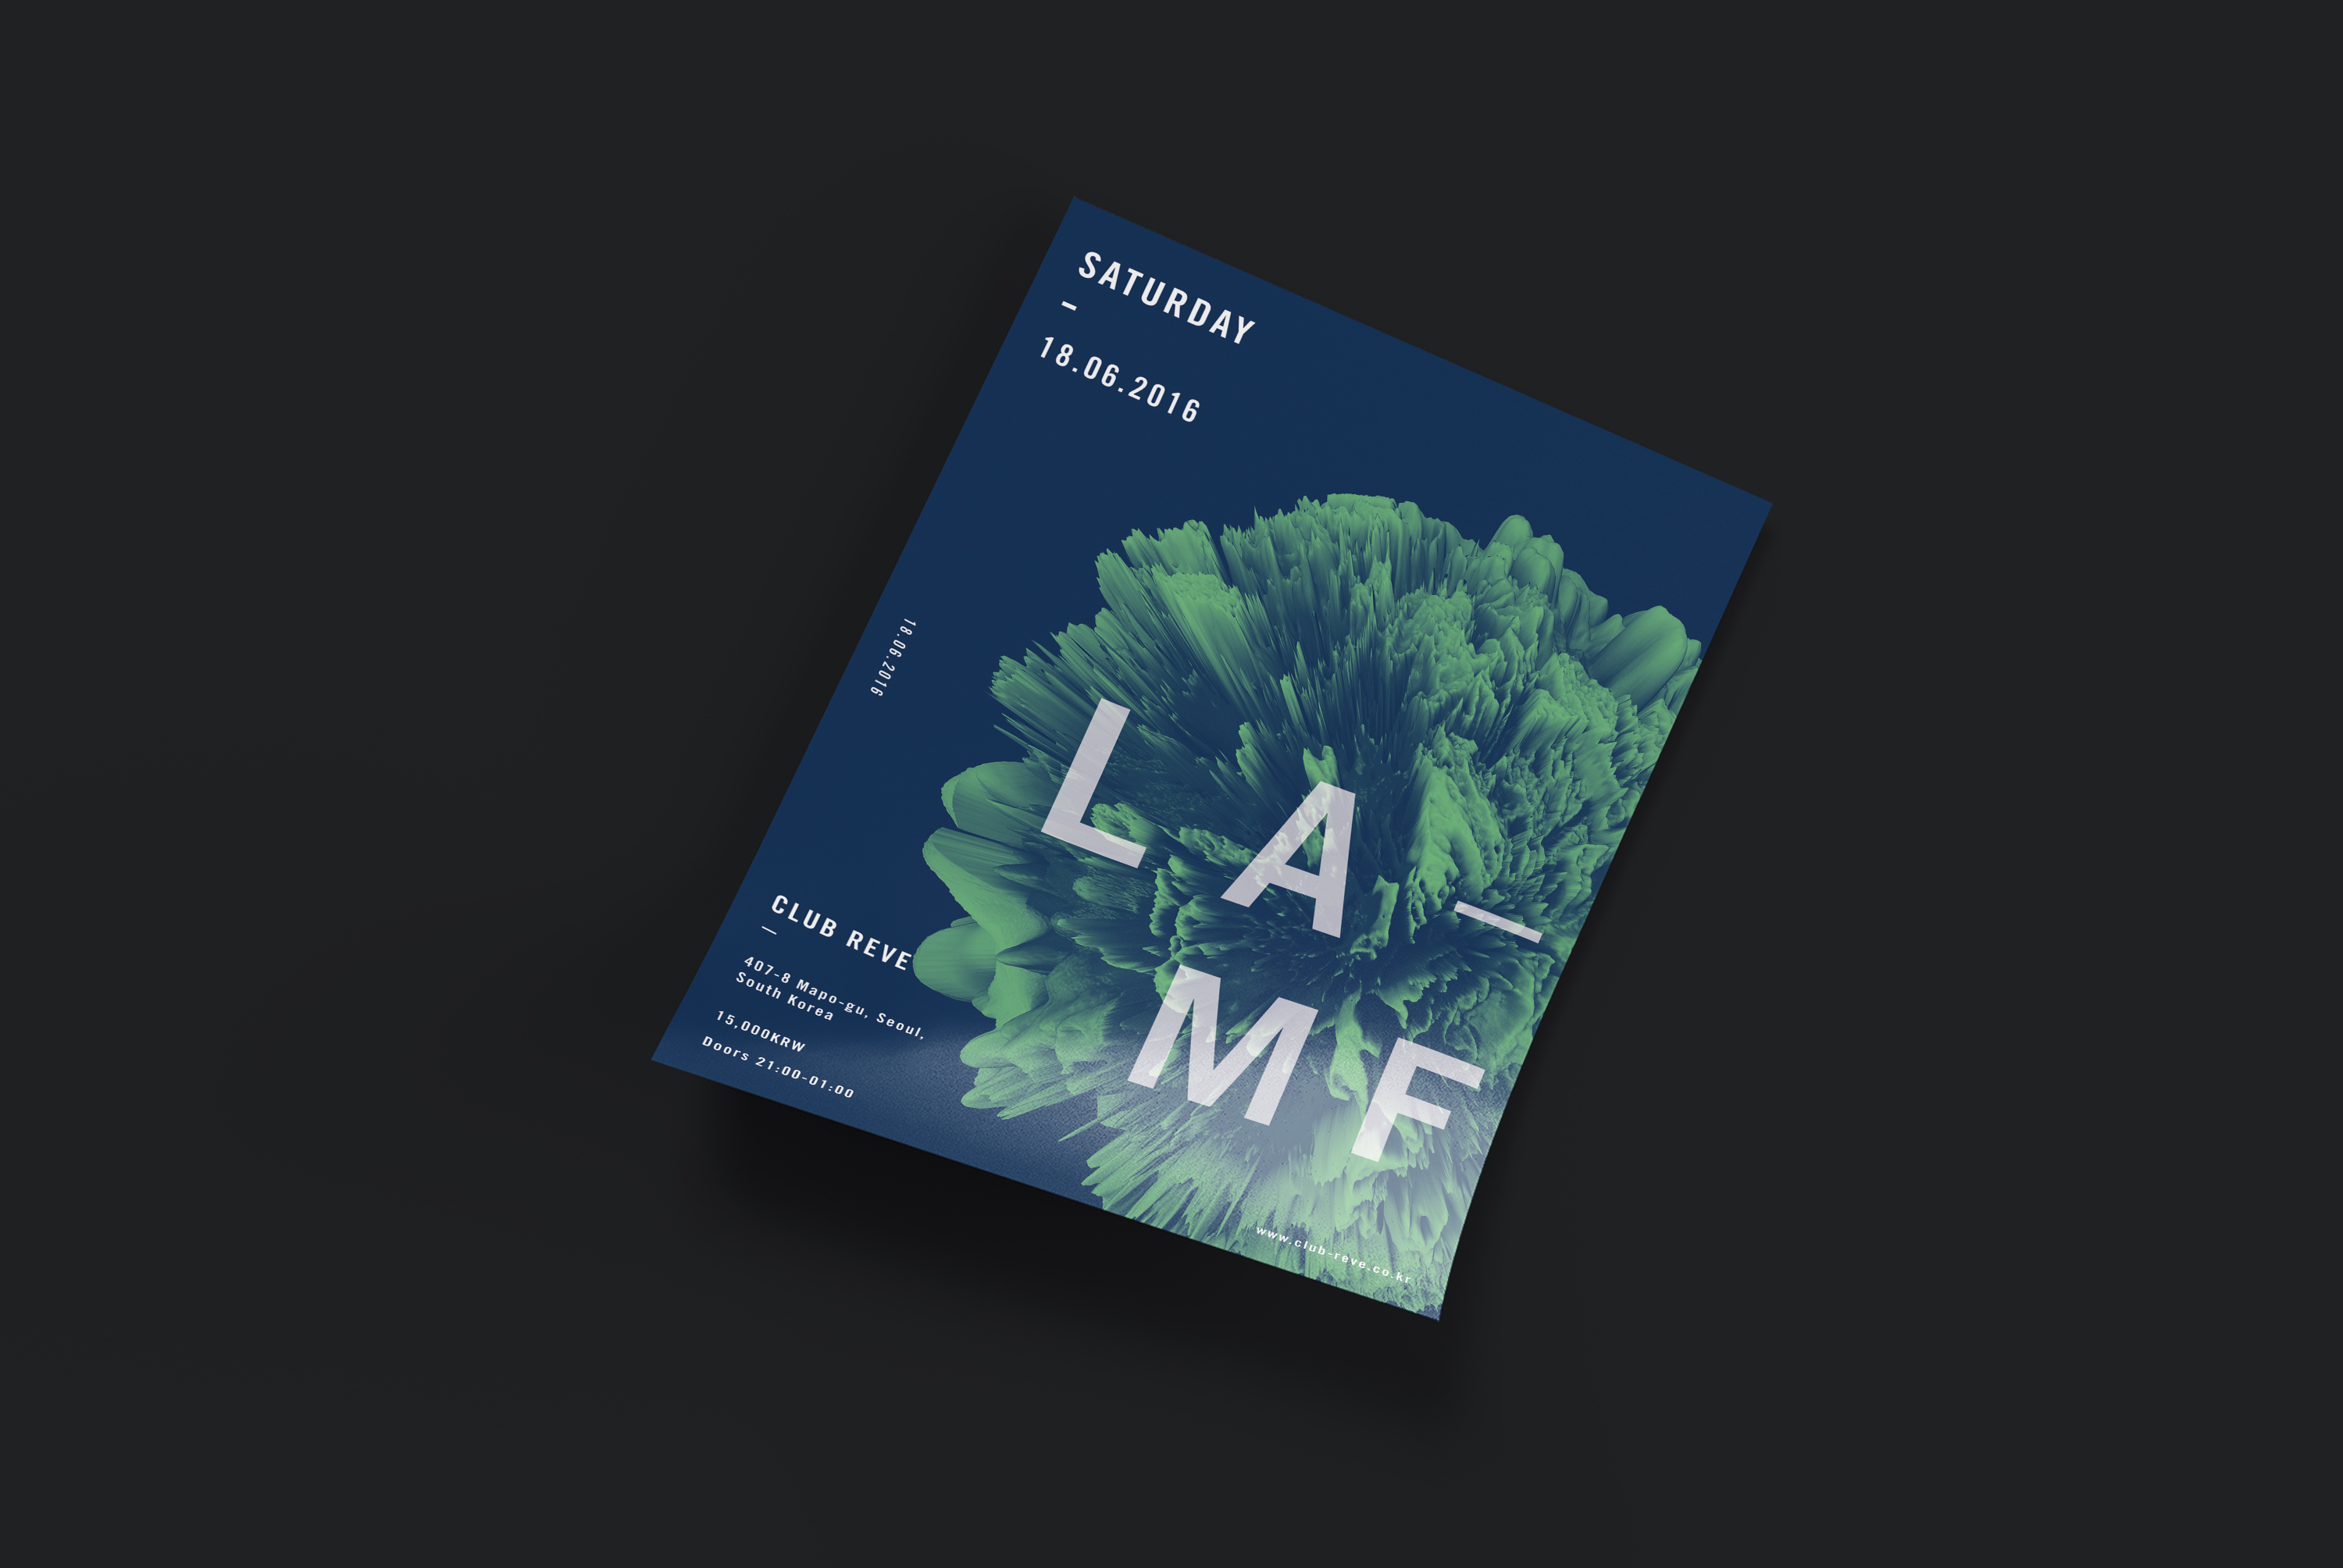 lamf-new-3